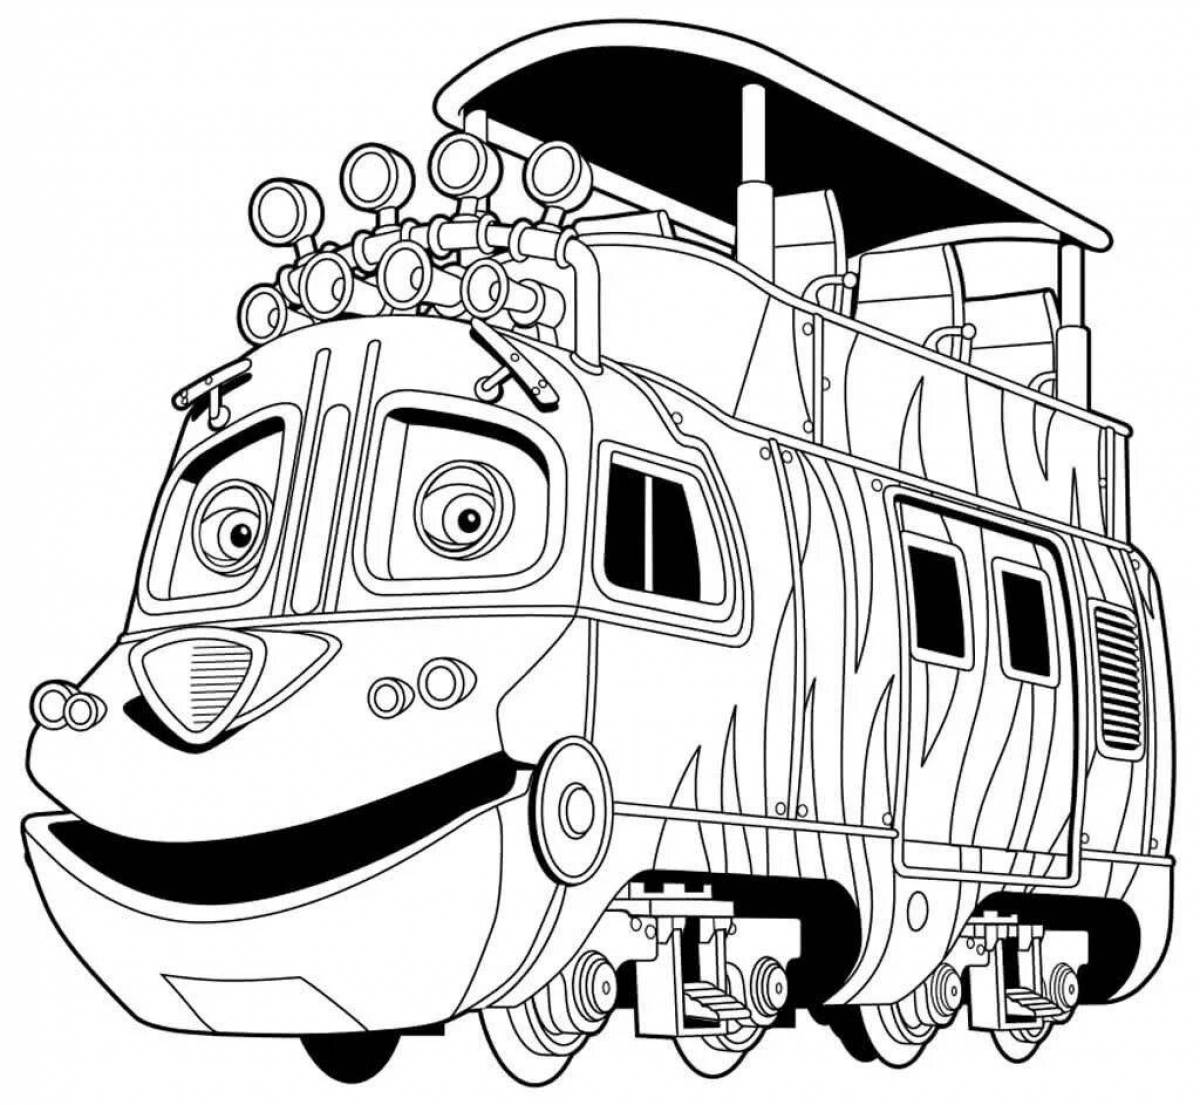 Bright chuggington locomotive coloring book